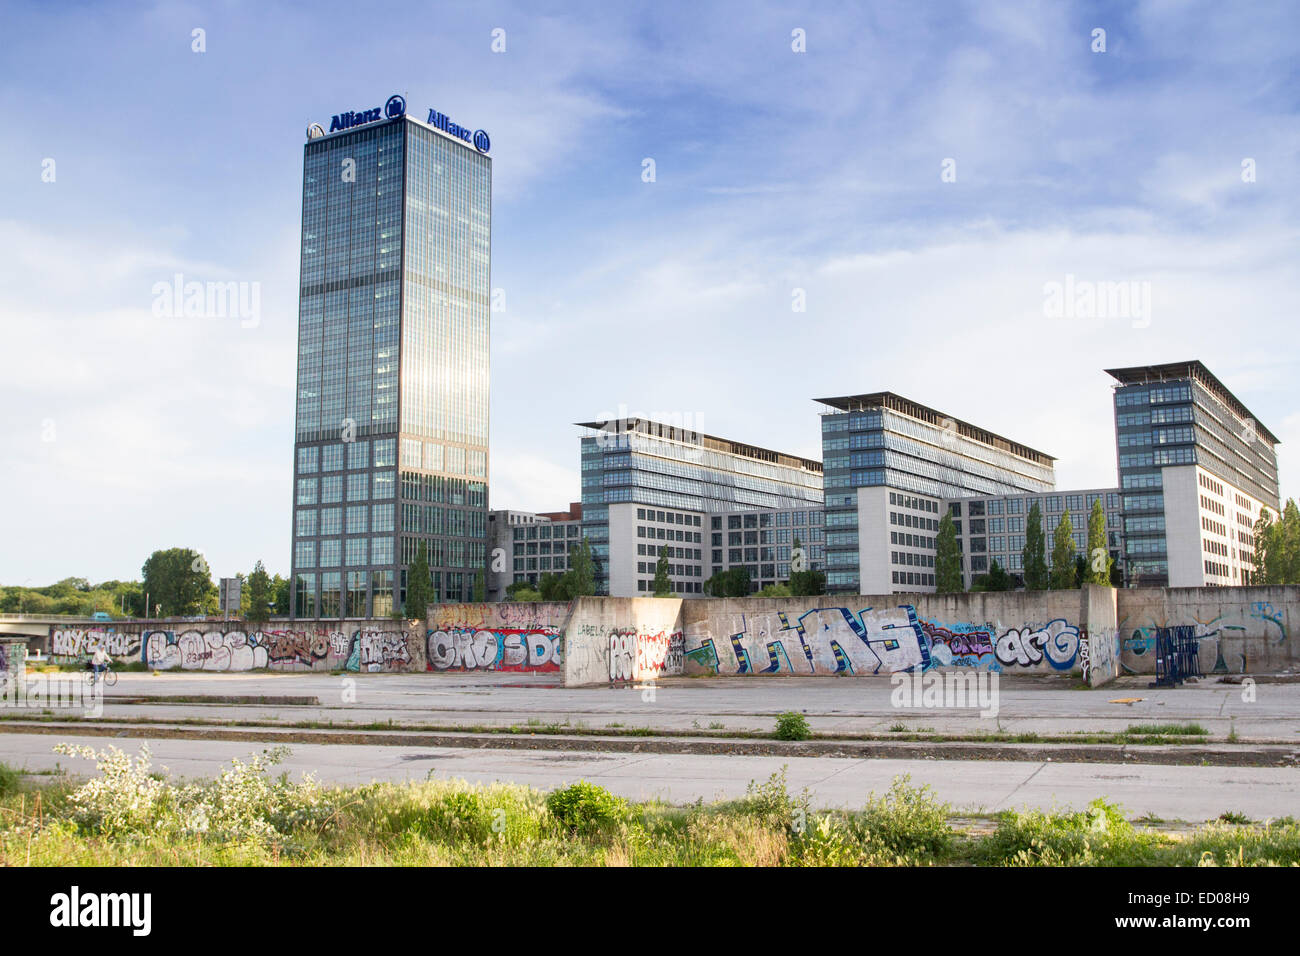 Allianz tower, Berlin, Germany. Stock Photo